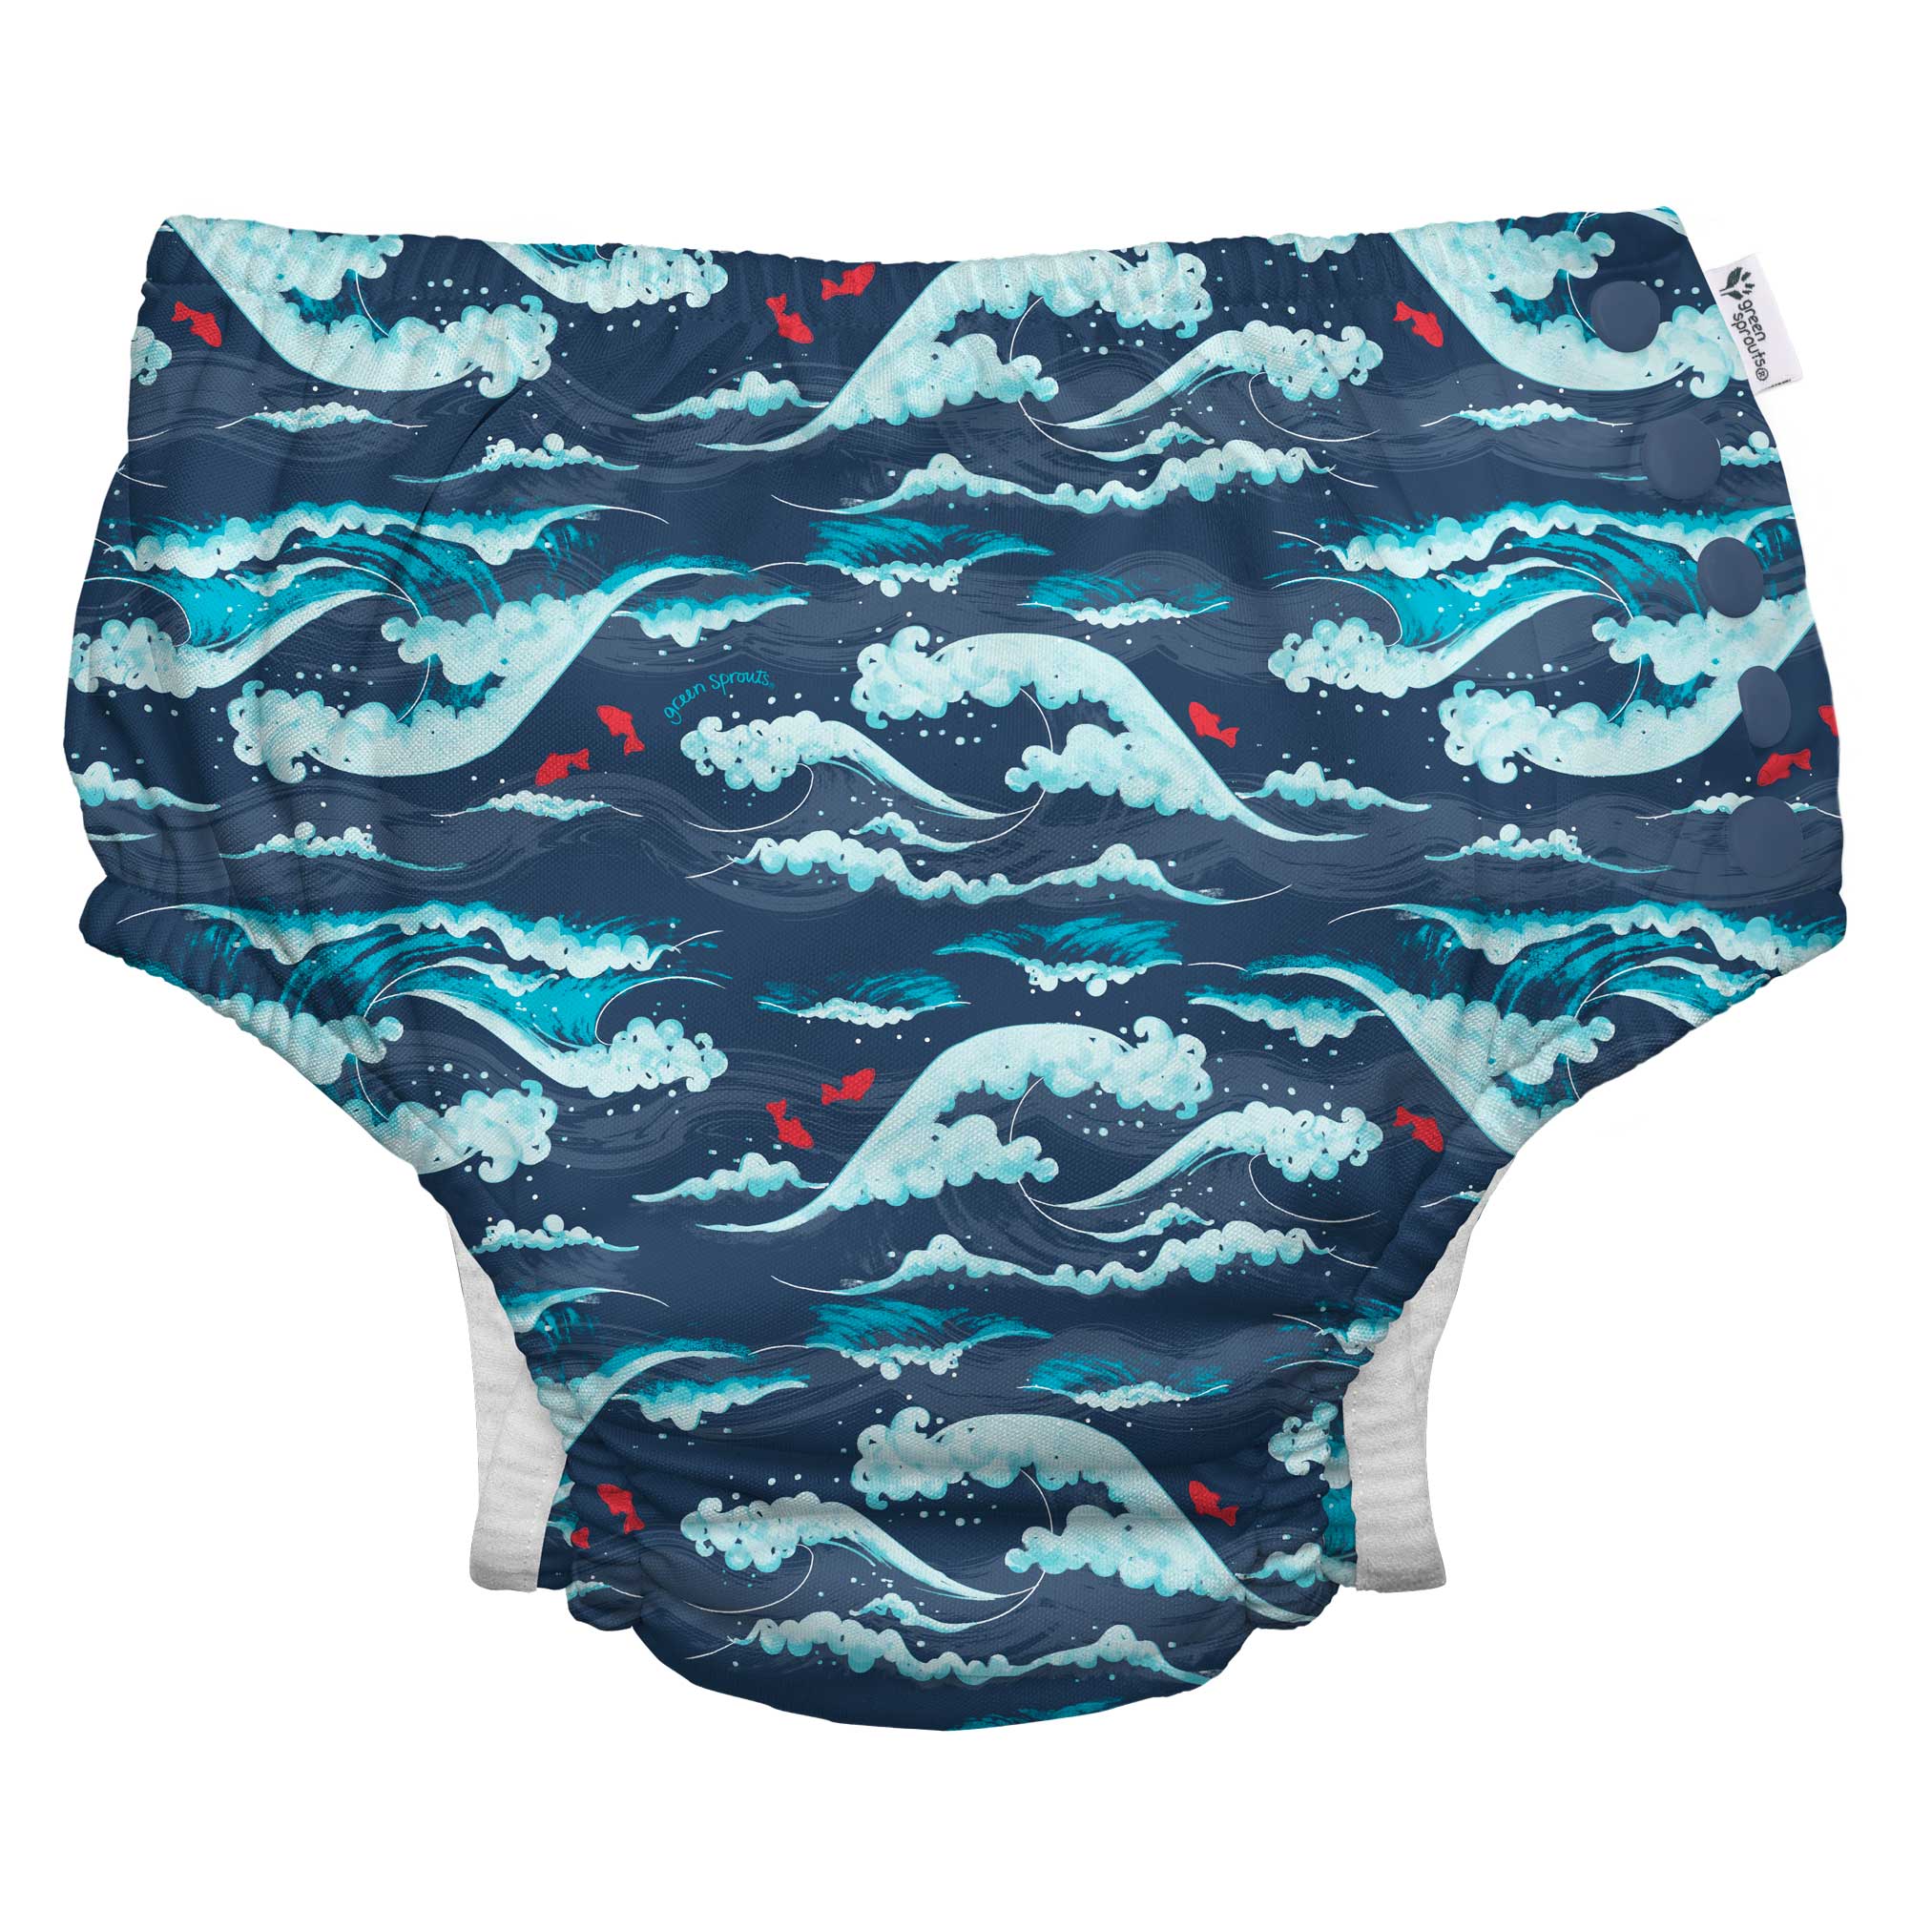 Eco Snap Swim Diaper - Classic Collection